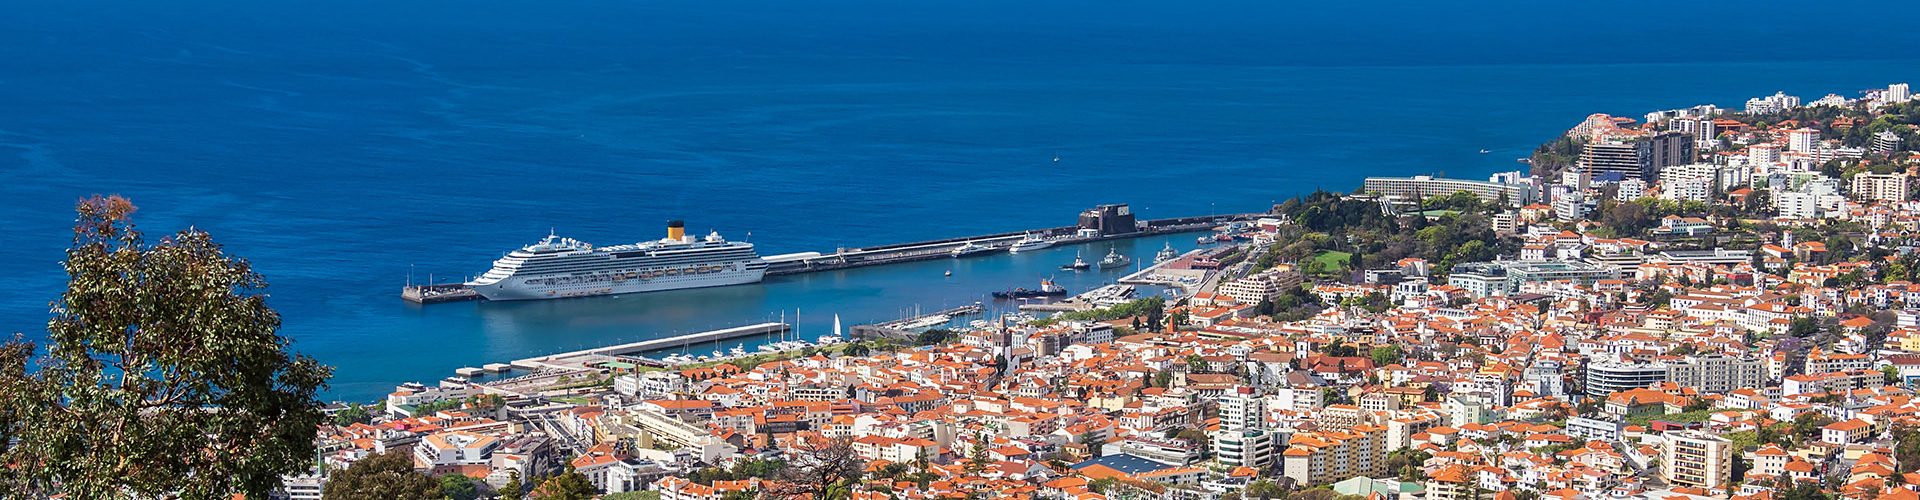 Kreuzfahrt Madeira Funchal - Welche Ausflüge kann man unternehmen?